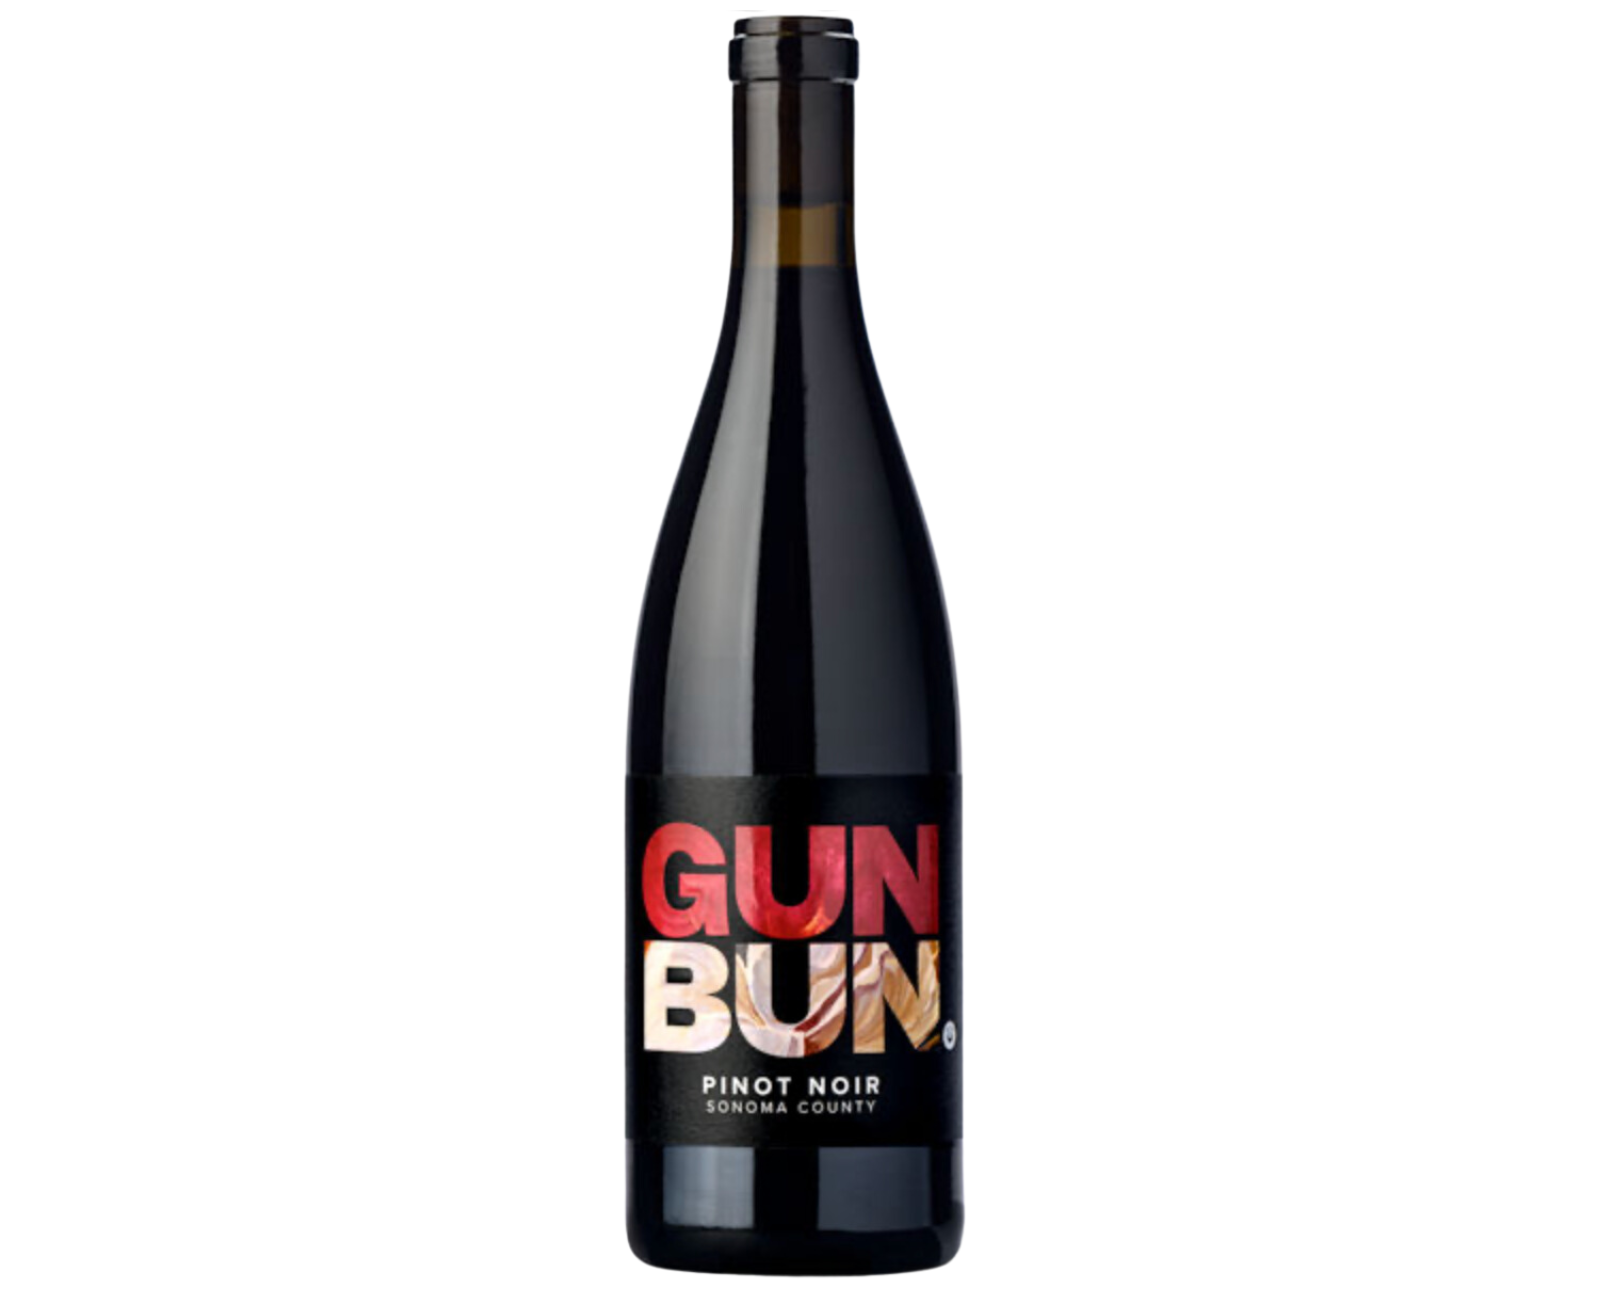 Gundlach Bundschu 2021 'GUNBUN' Pinot Noir, Sonoma Valley